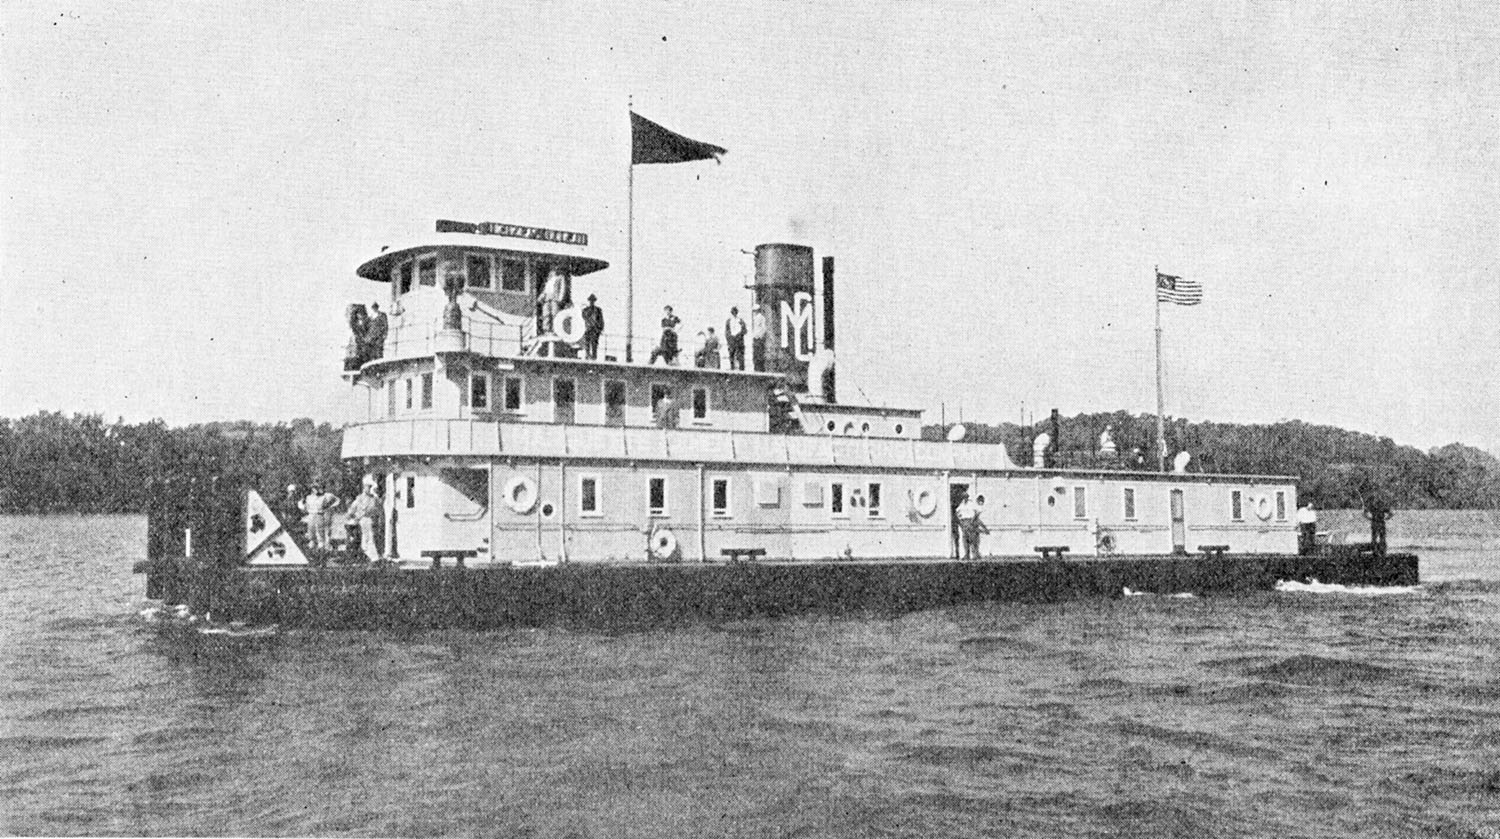 A Modern Diesel Boat Followed The Alexander Mackenzie At MMC